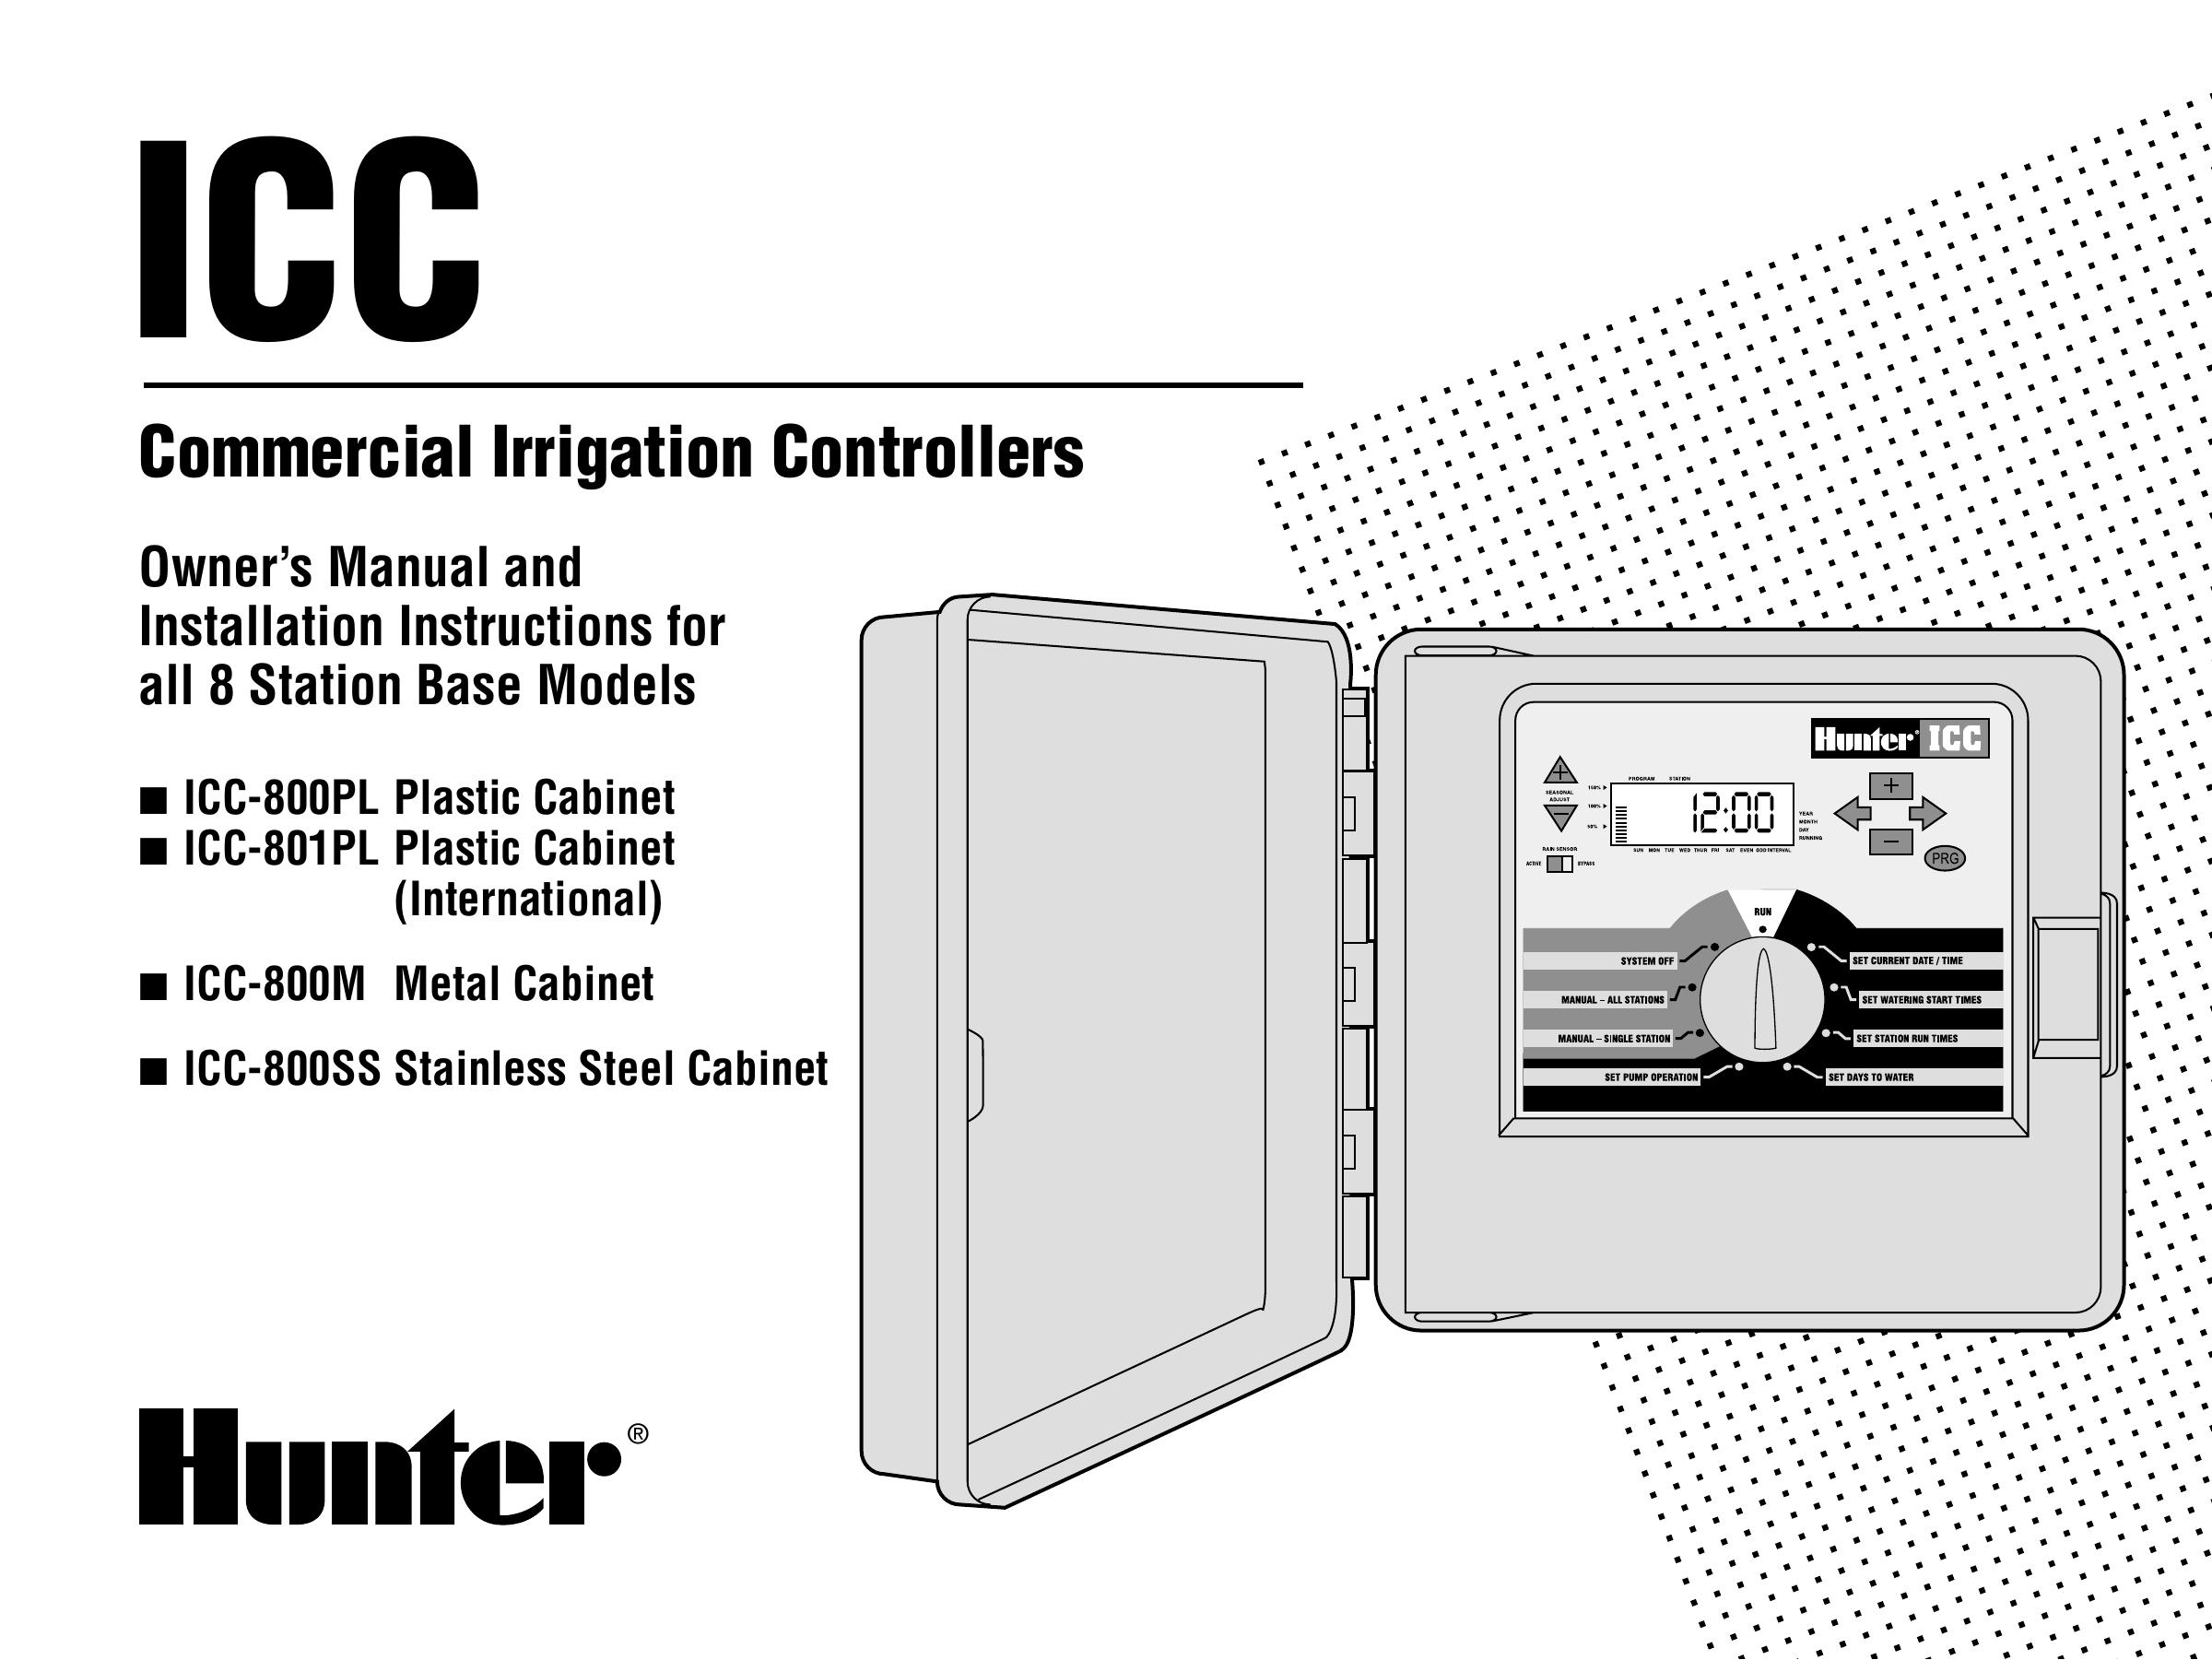 Hunter Fan ICC-800PL Irrigation System User Manual